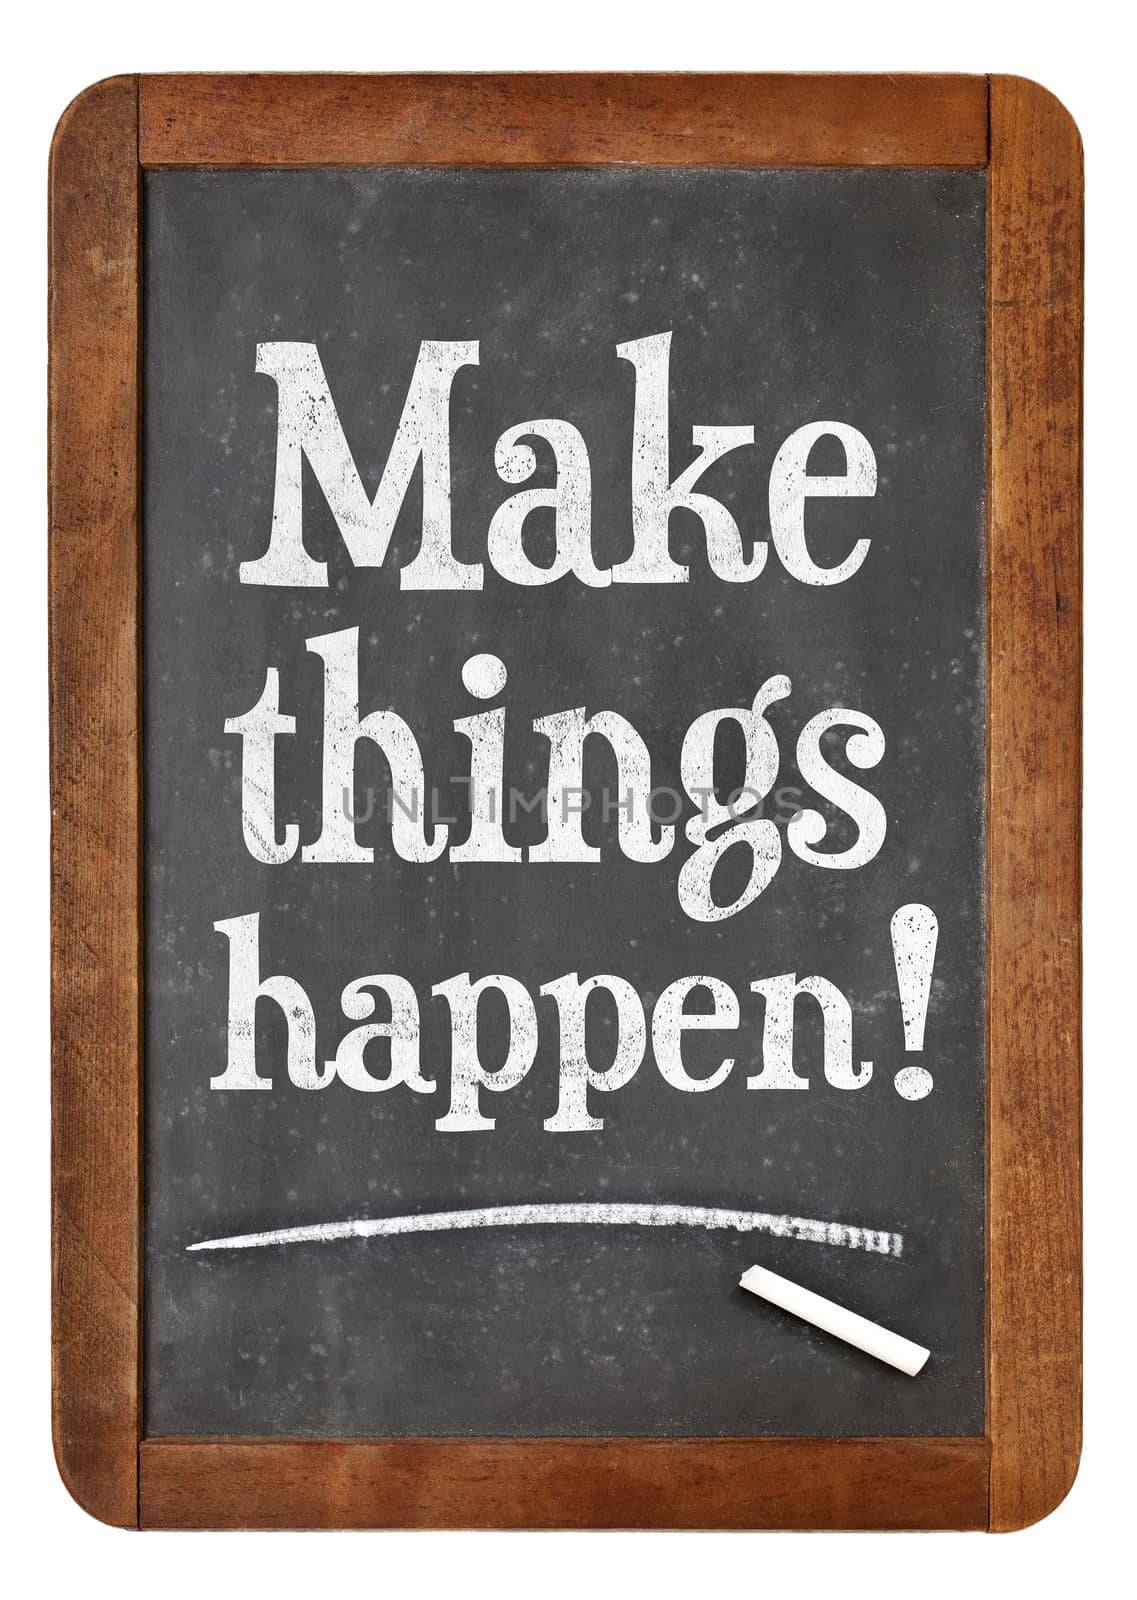 Make things happen motivational advice or reminder - chalk text on a vintage blackboard